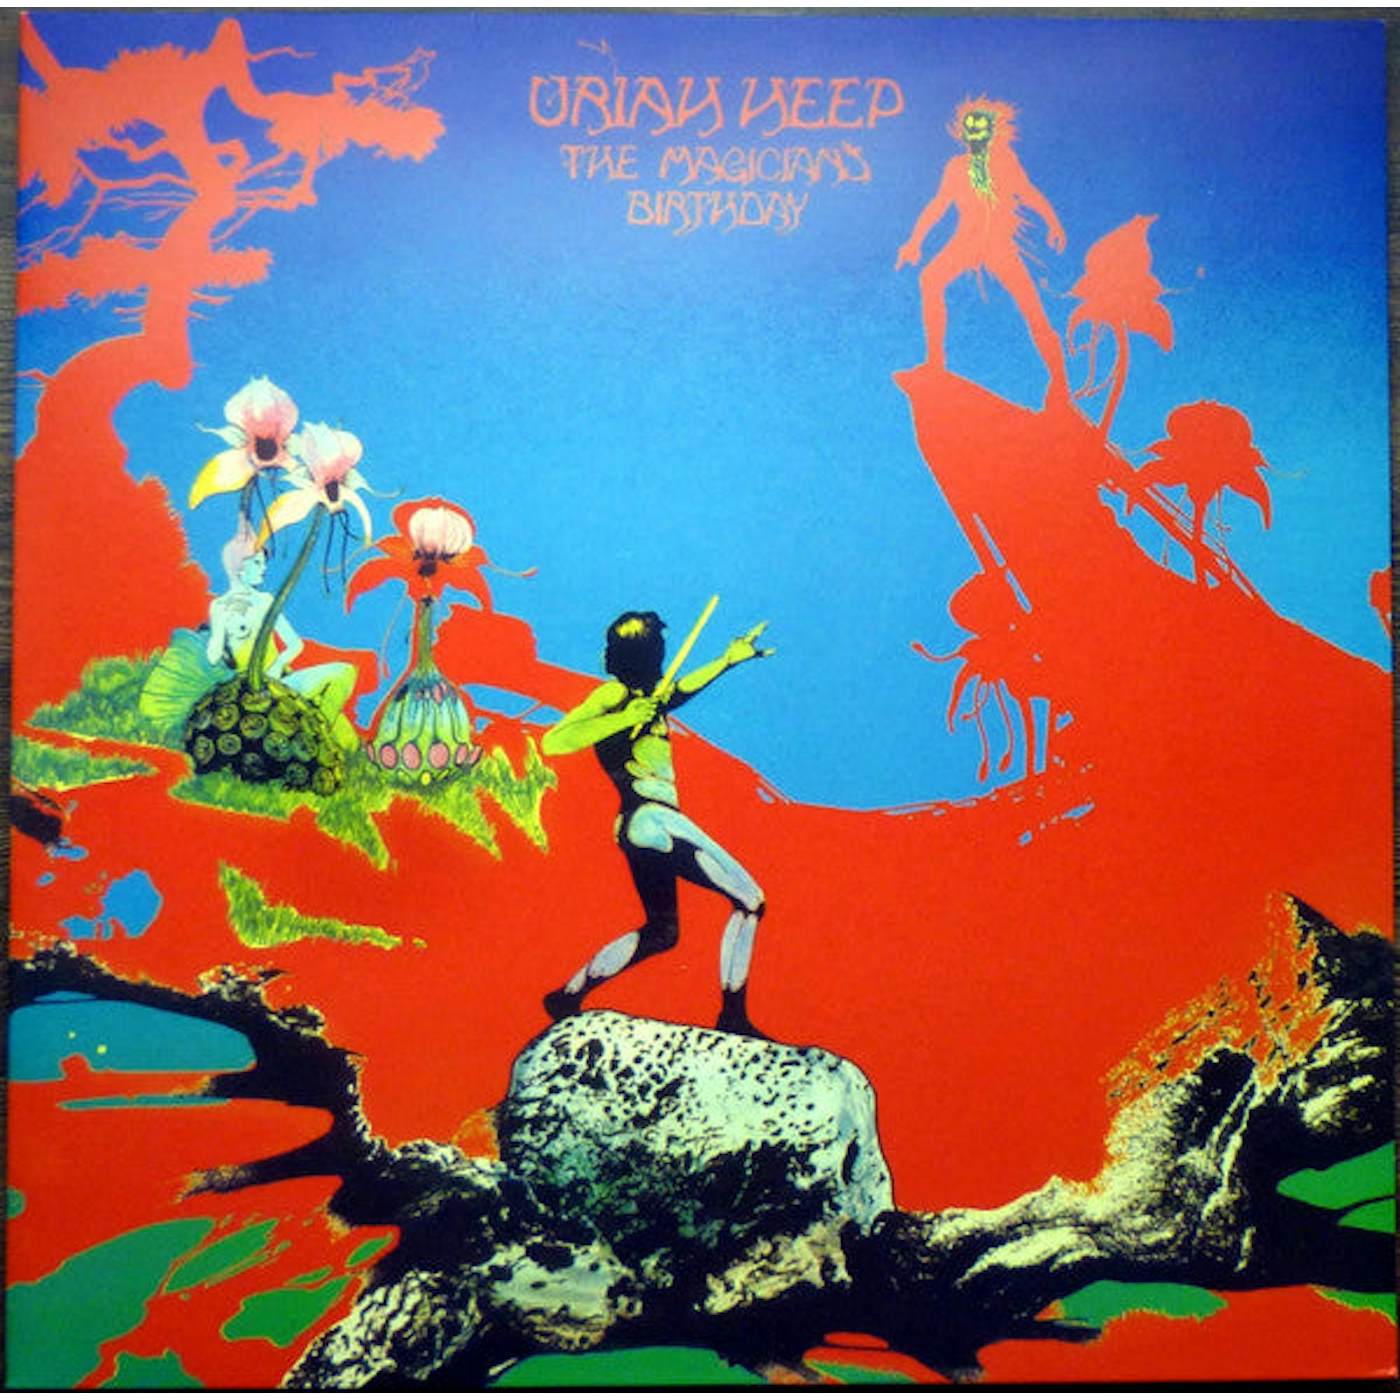 Uriah Heep LP Vinyl Record - The Magician's Birthday